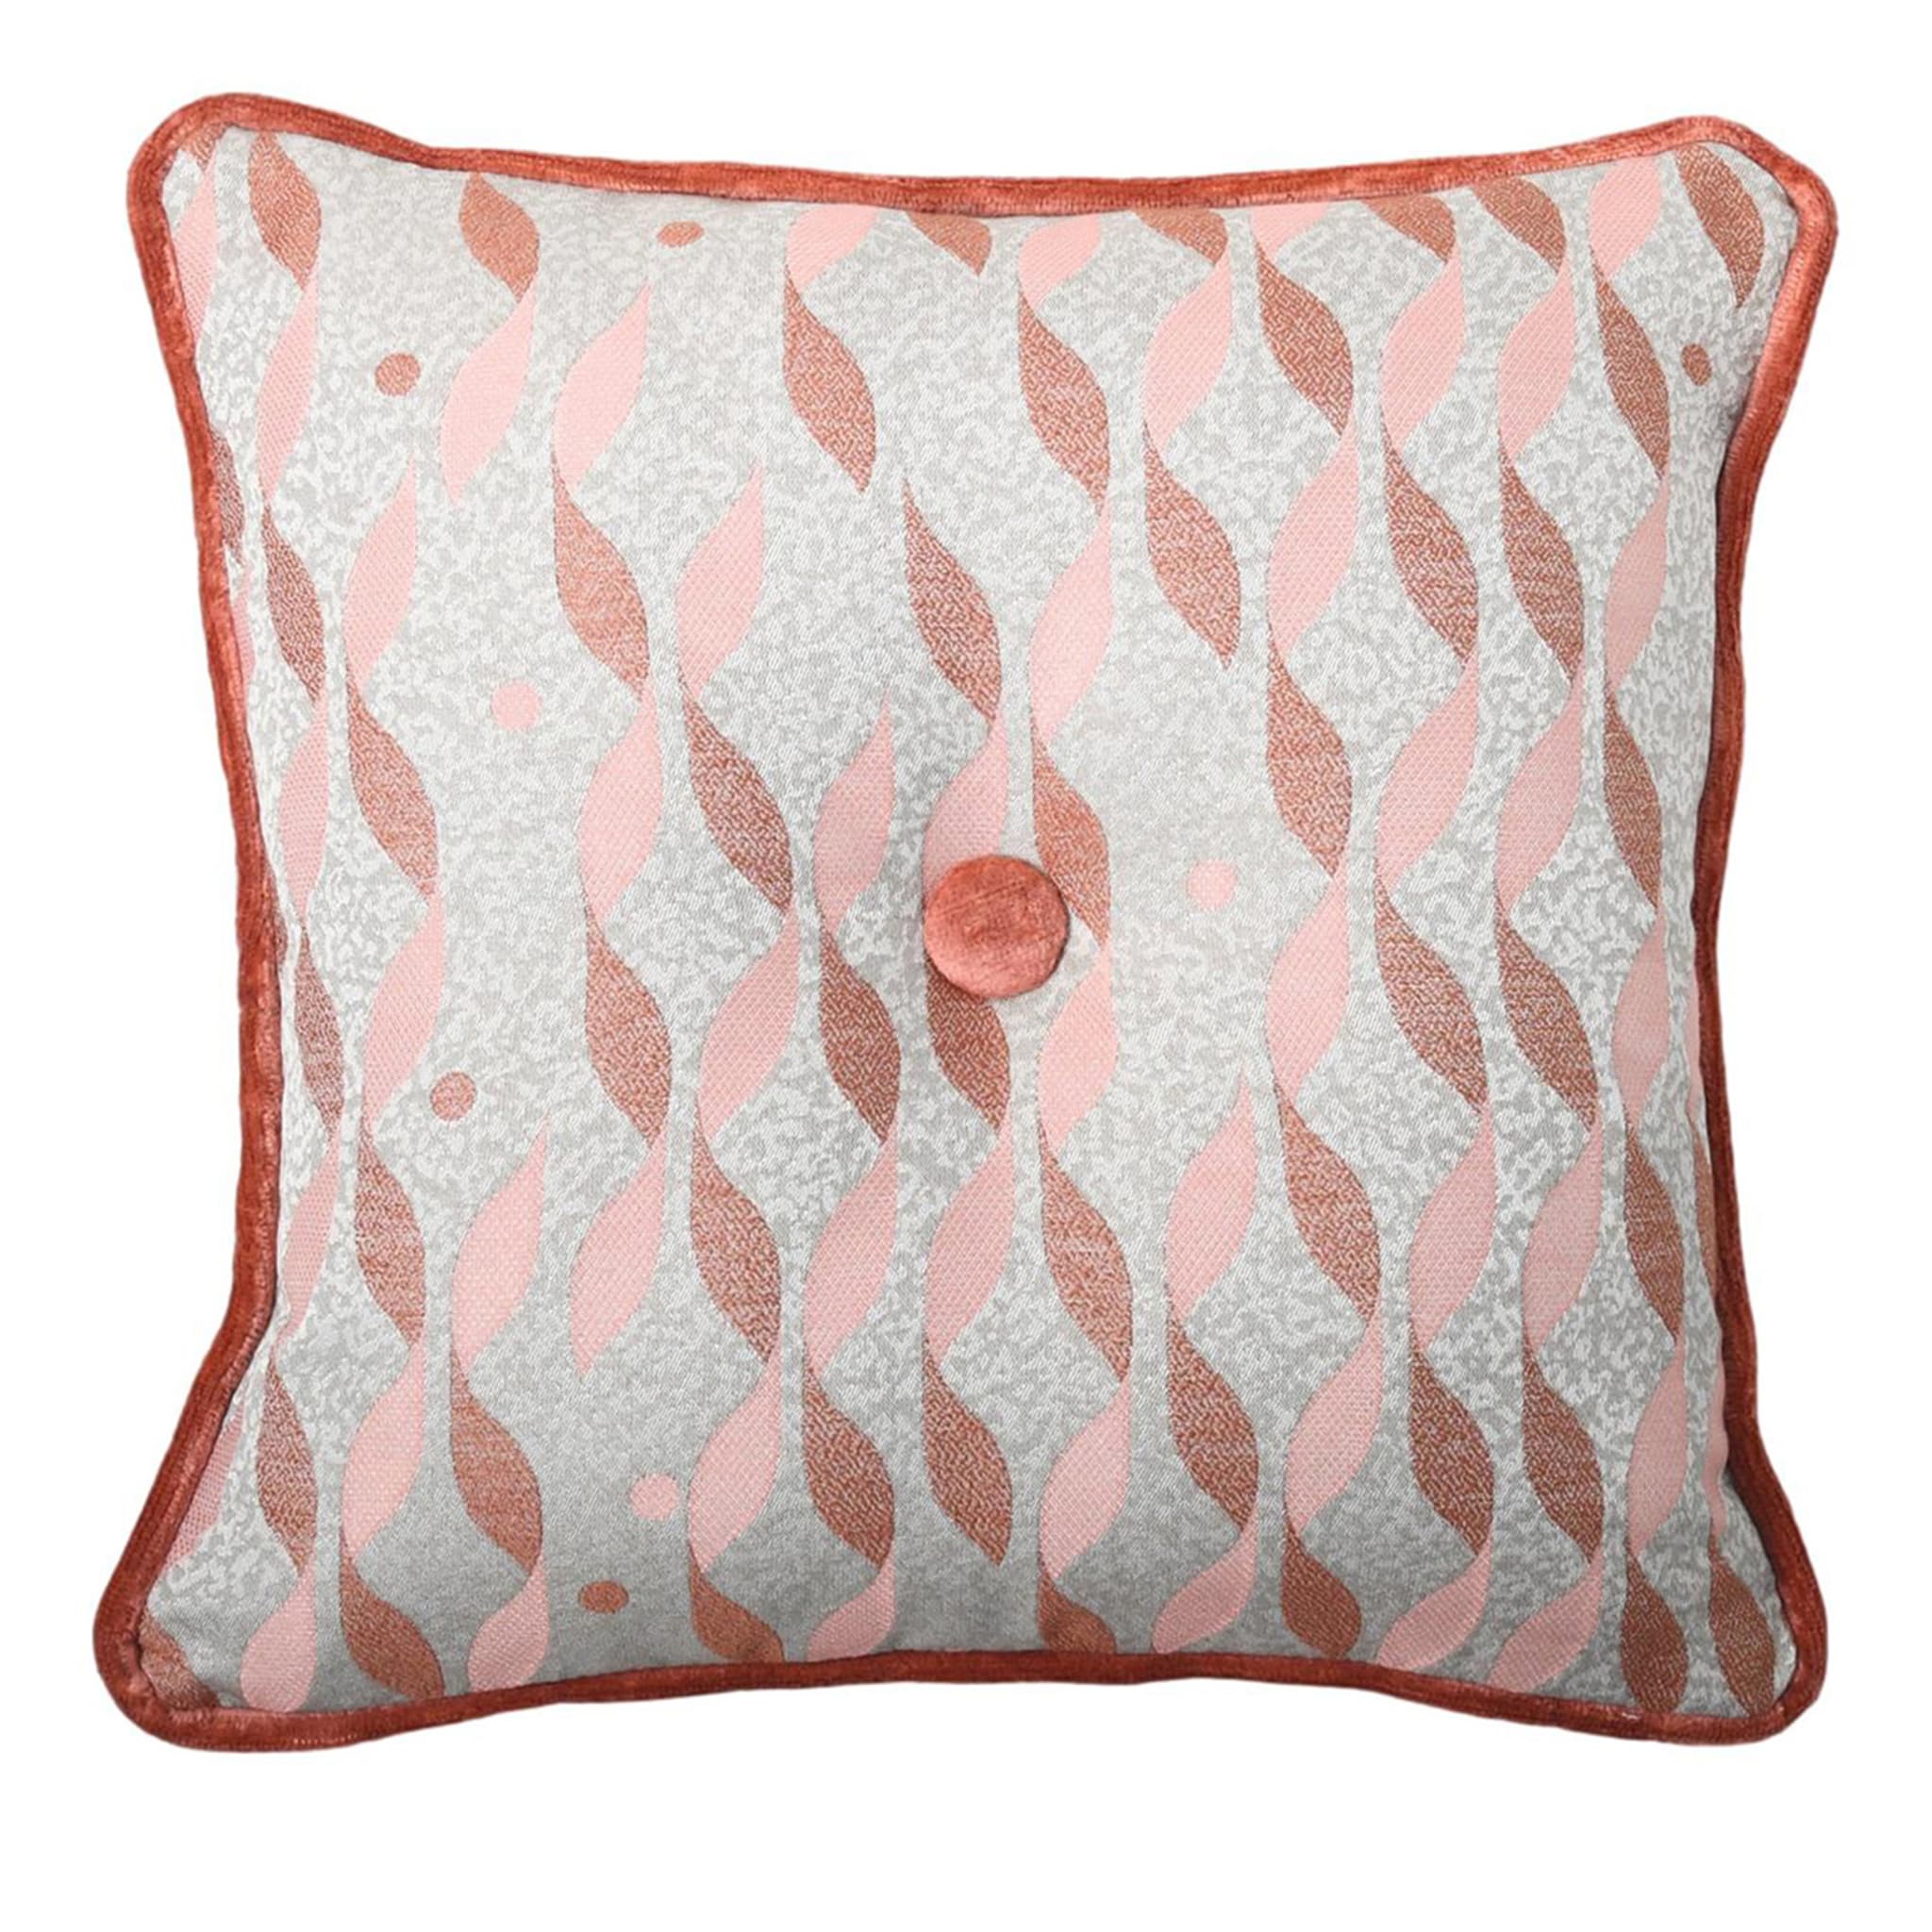 Pink Carrè Cushion in Talia Jacquard Fabric - Main view